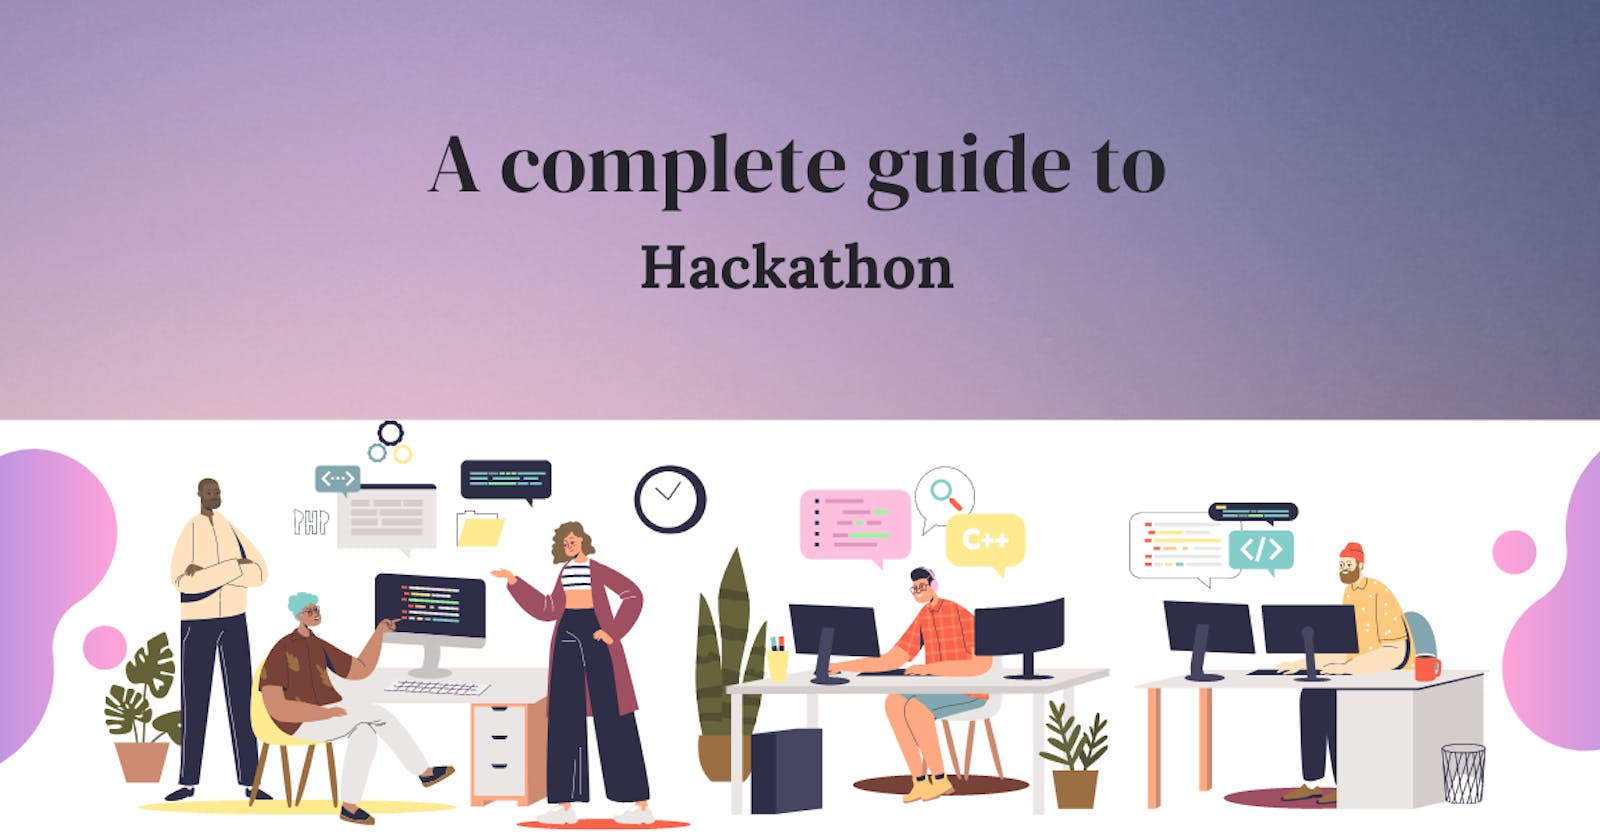 What is a Hackathon? A complete guide about Hackathon.